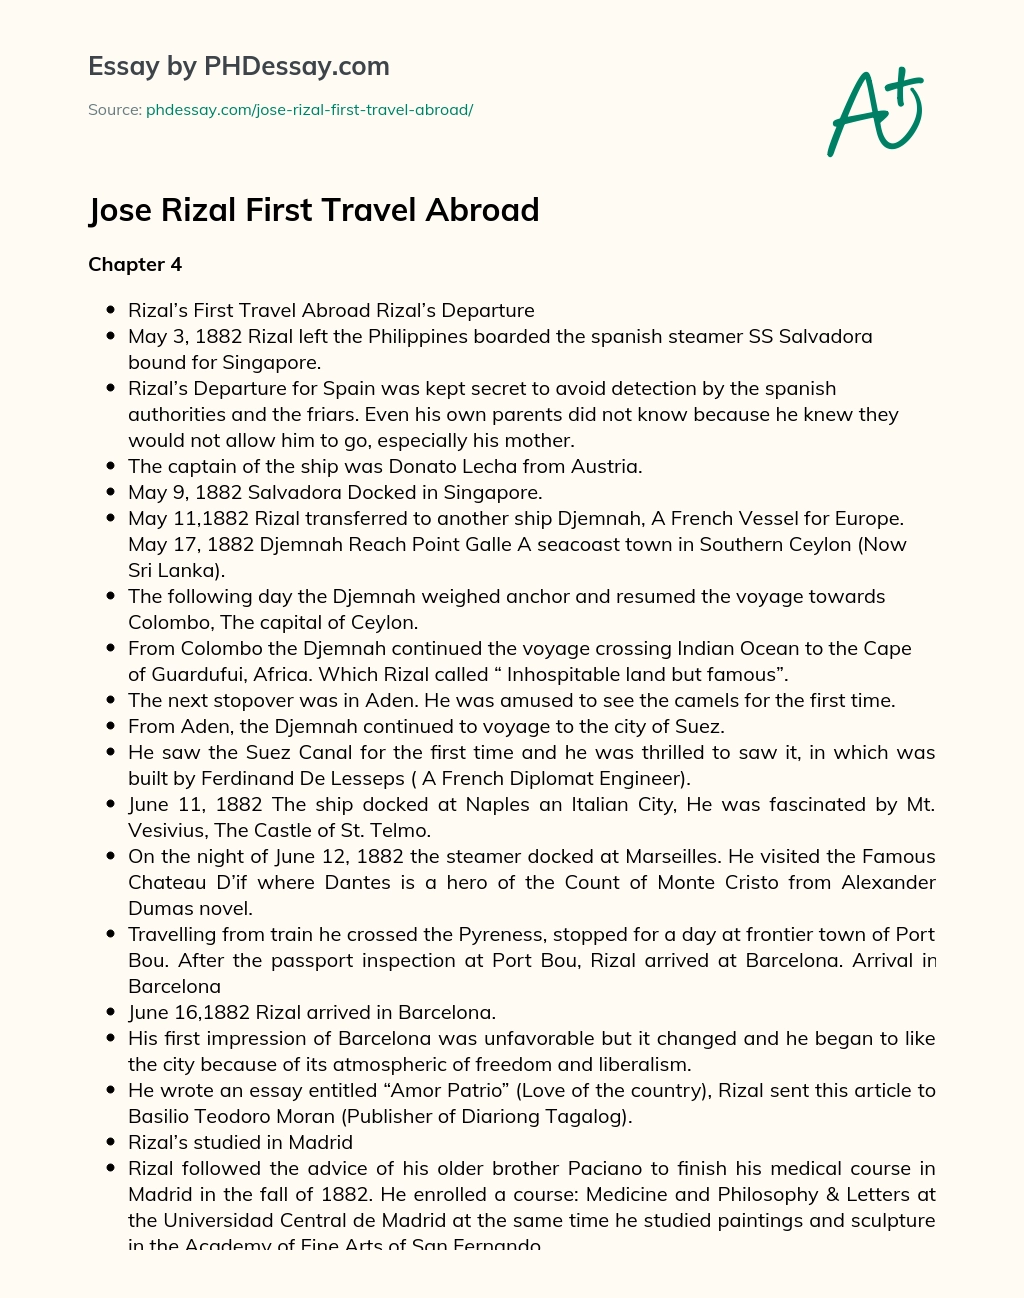 Jose Rizal First Travel Abroad essay